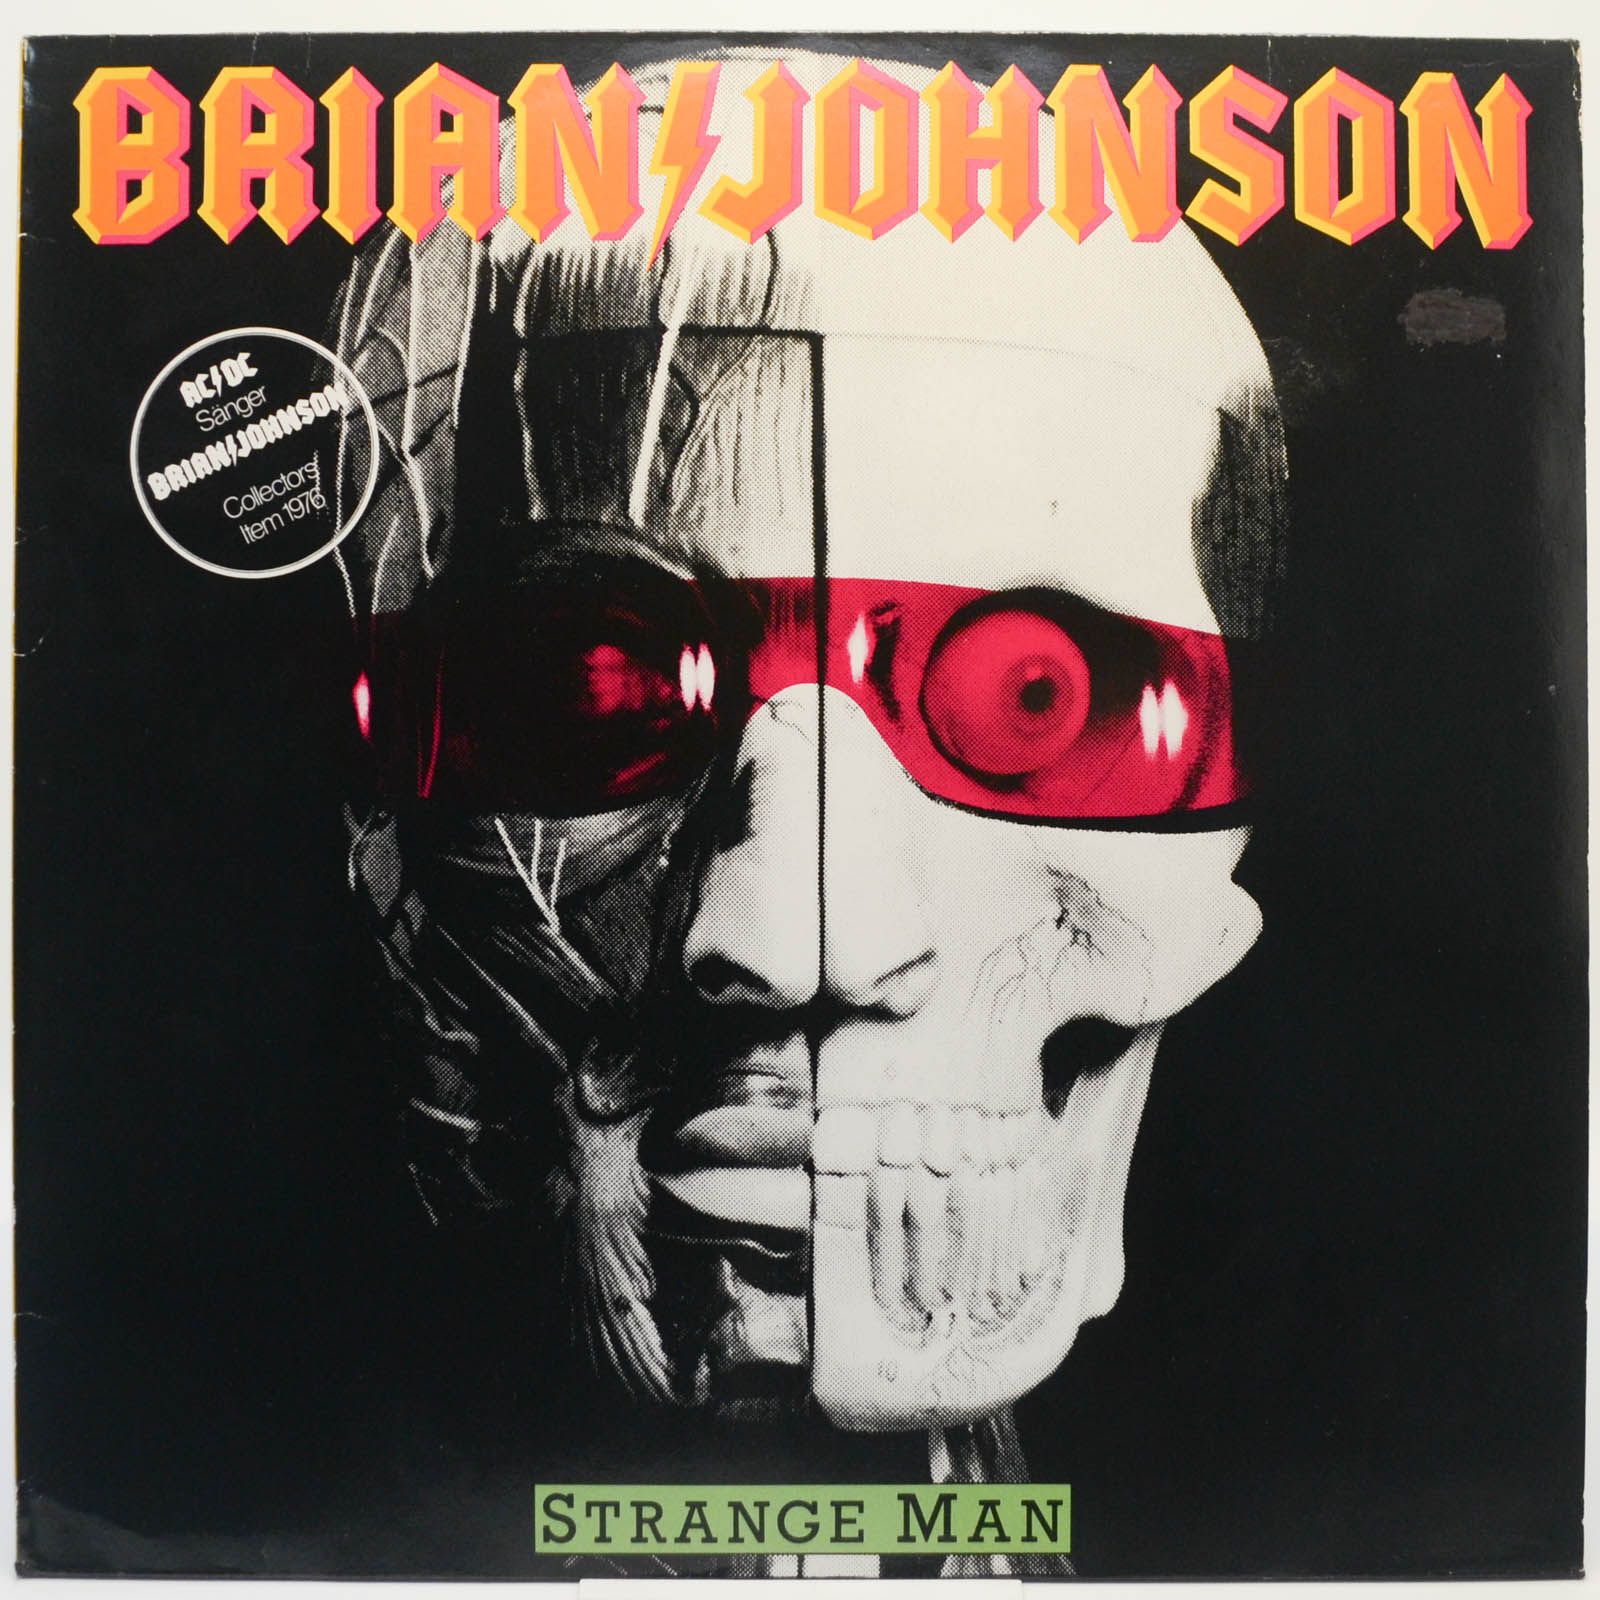 Brian Johnson — Strange Man, 1982